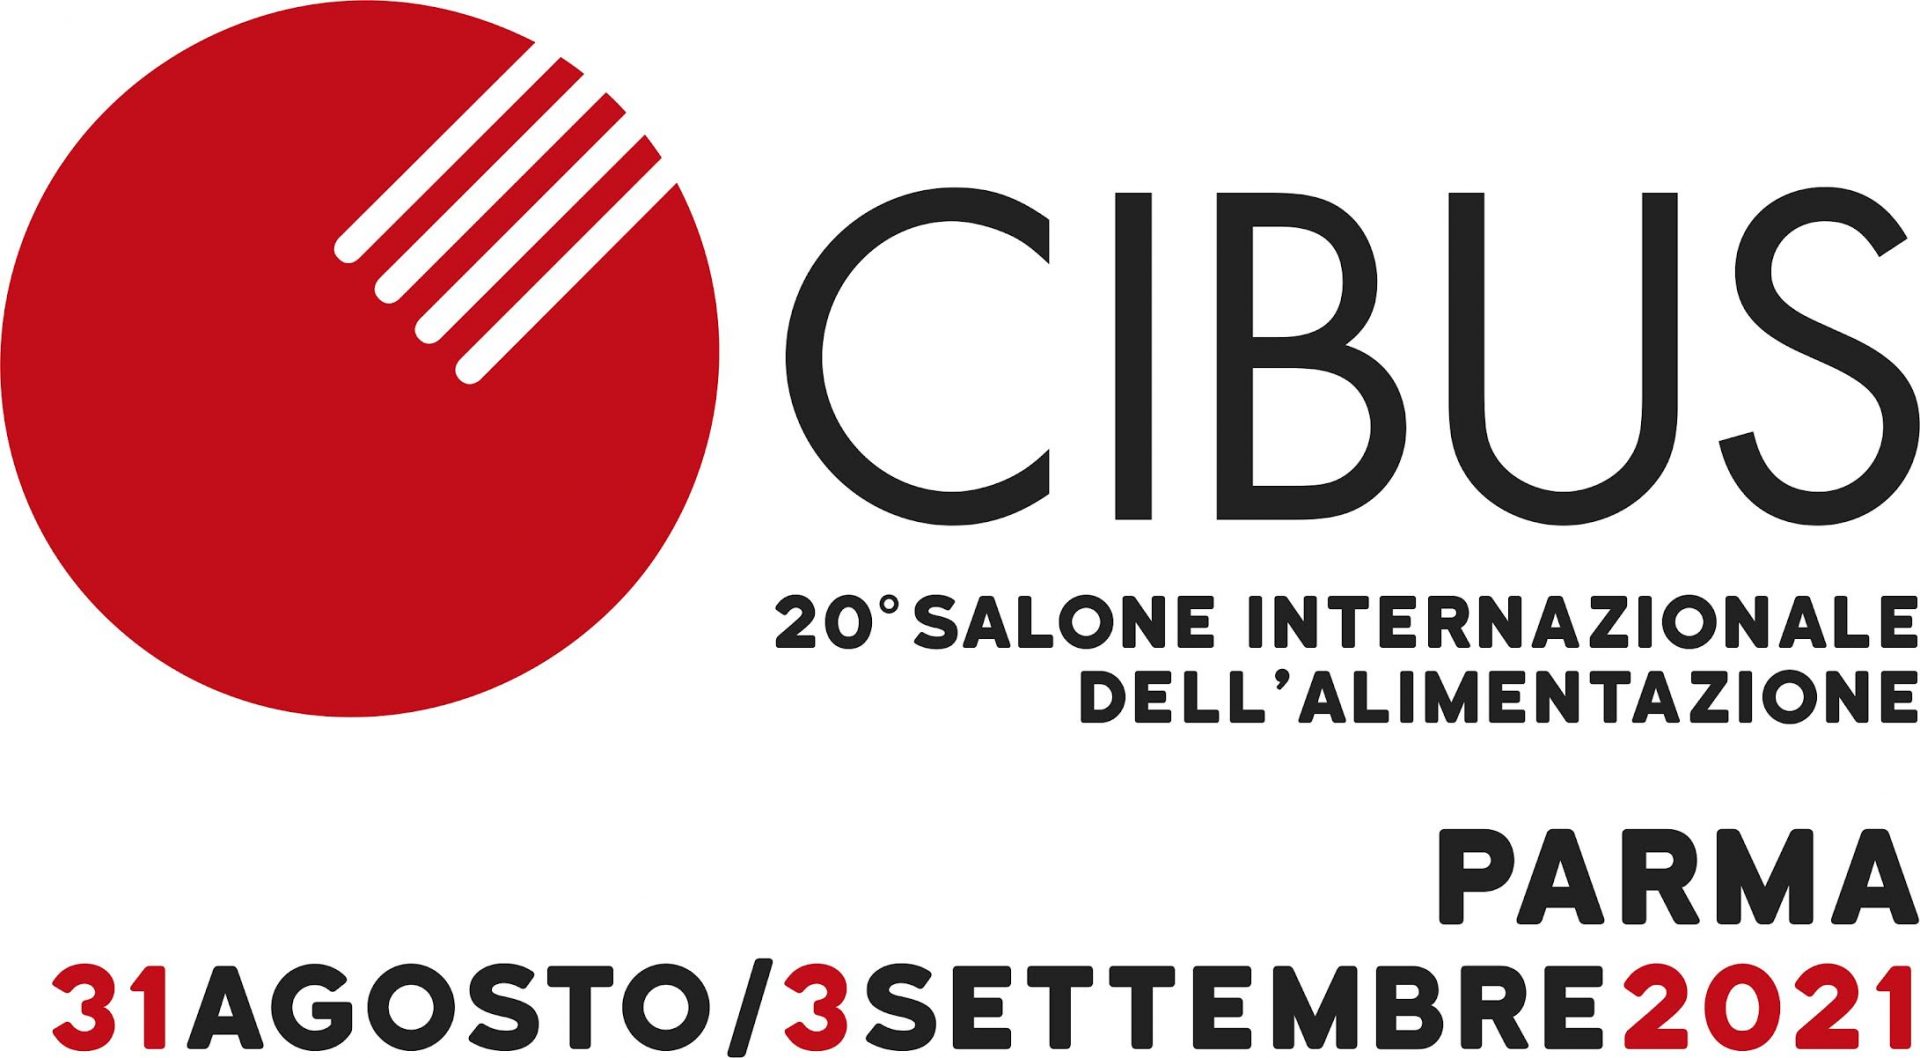 Reggio Calabria a Cibus: la Metrocity al prestigioso evento dedicato al food made in Italy